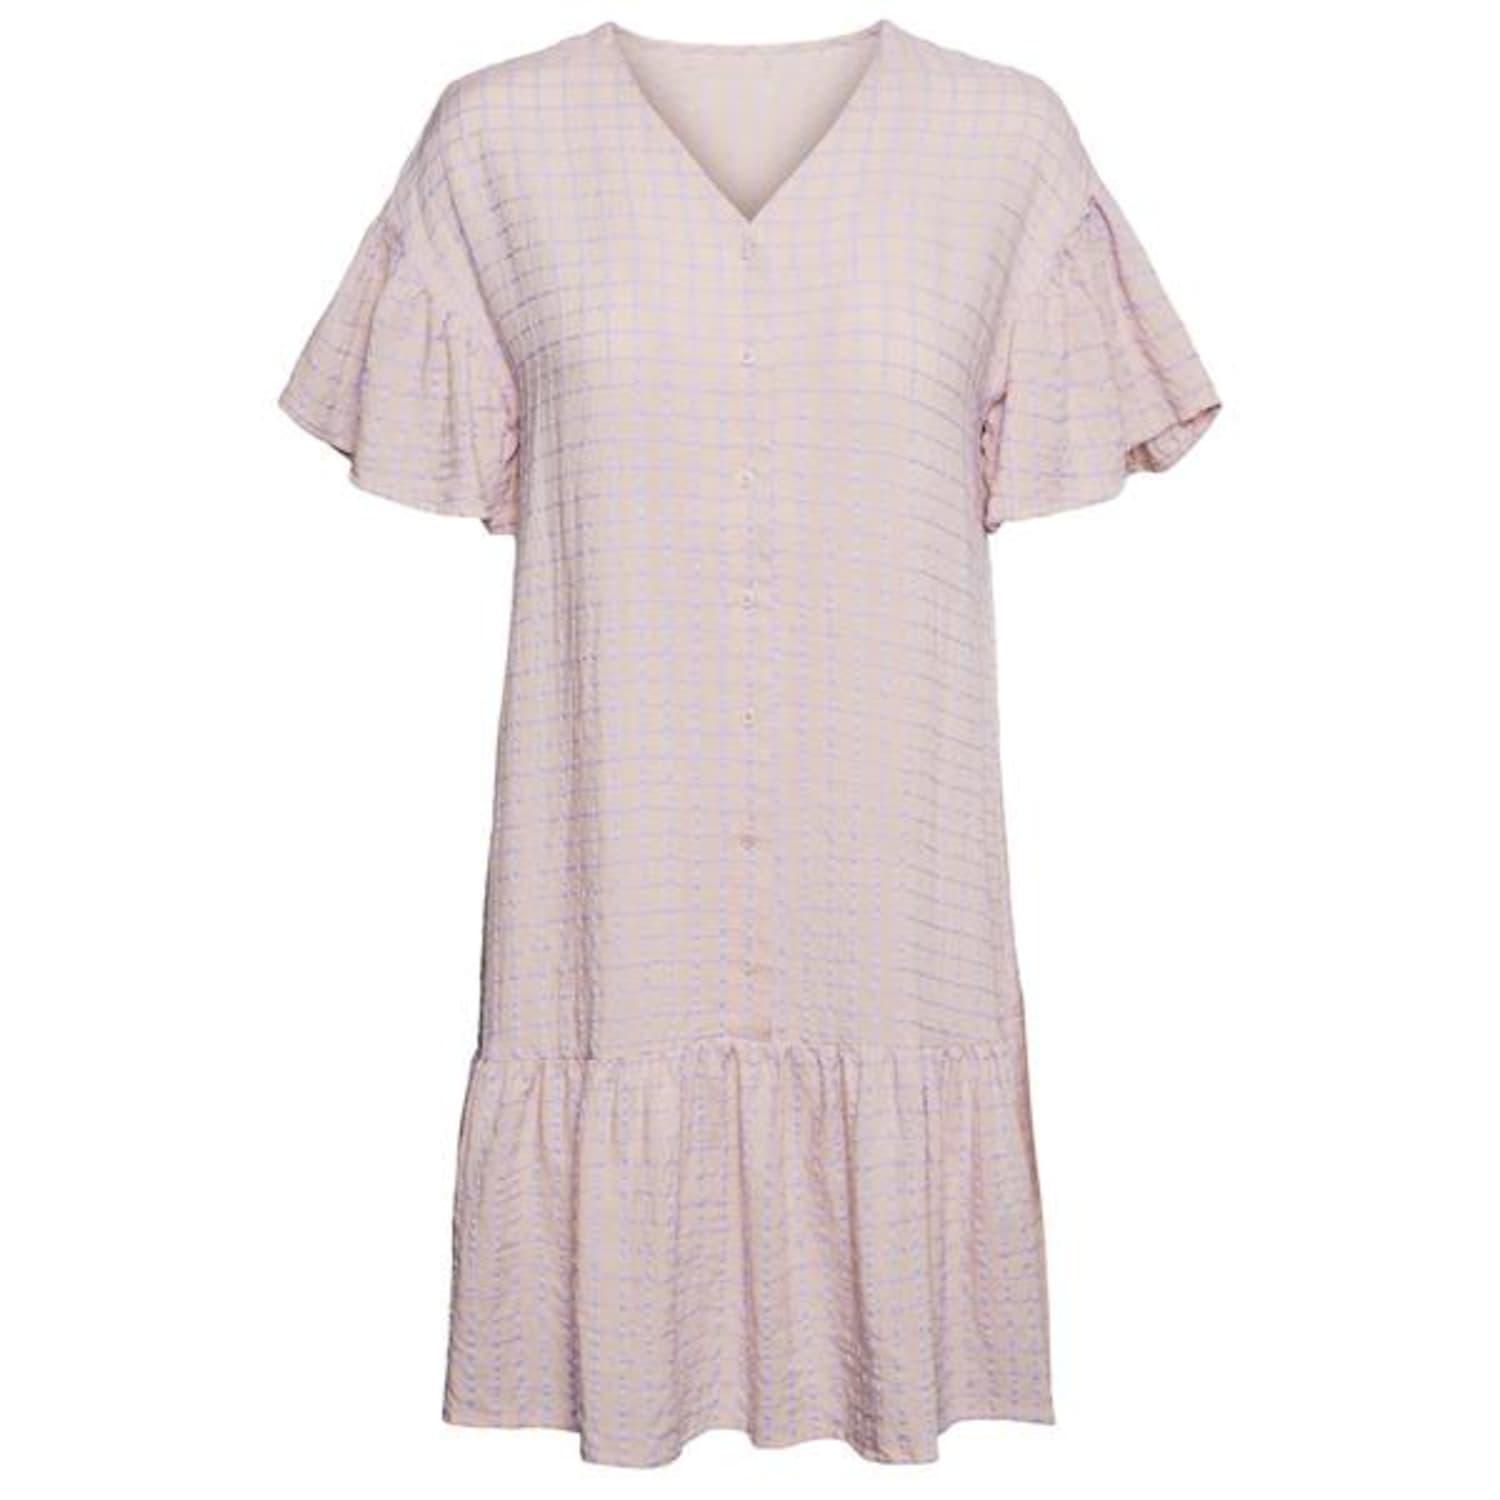 Vero Moda Cotton Drop Waist Check Dress in Pink | Lyst